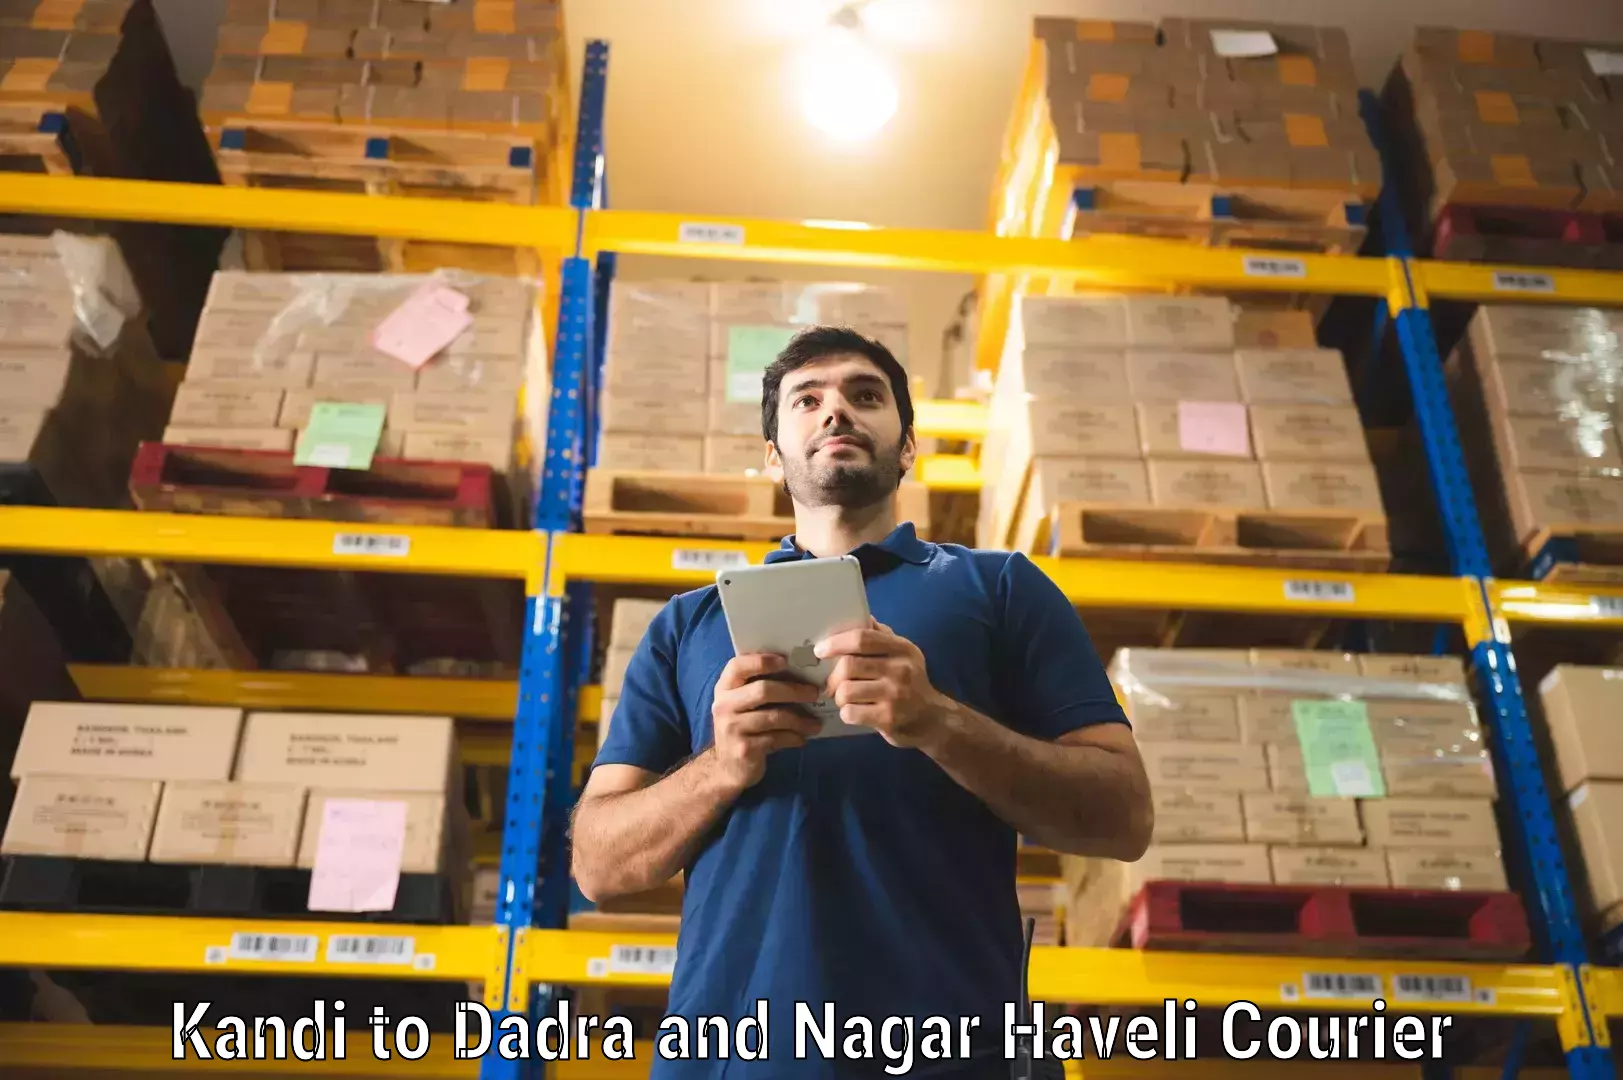 Global courier networks Kandi to Dadra and Nagar Haveli